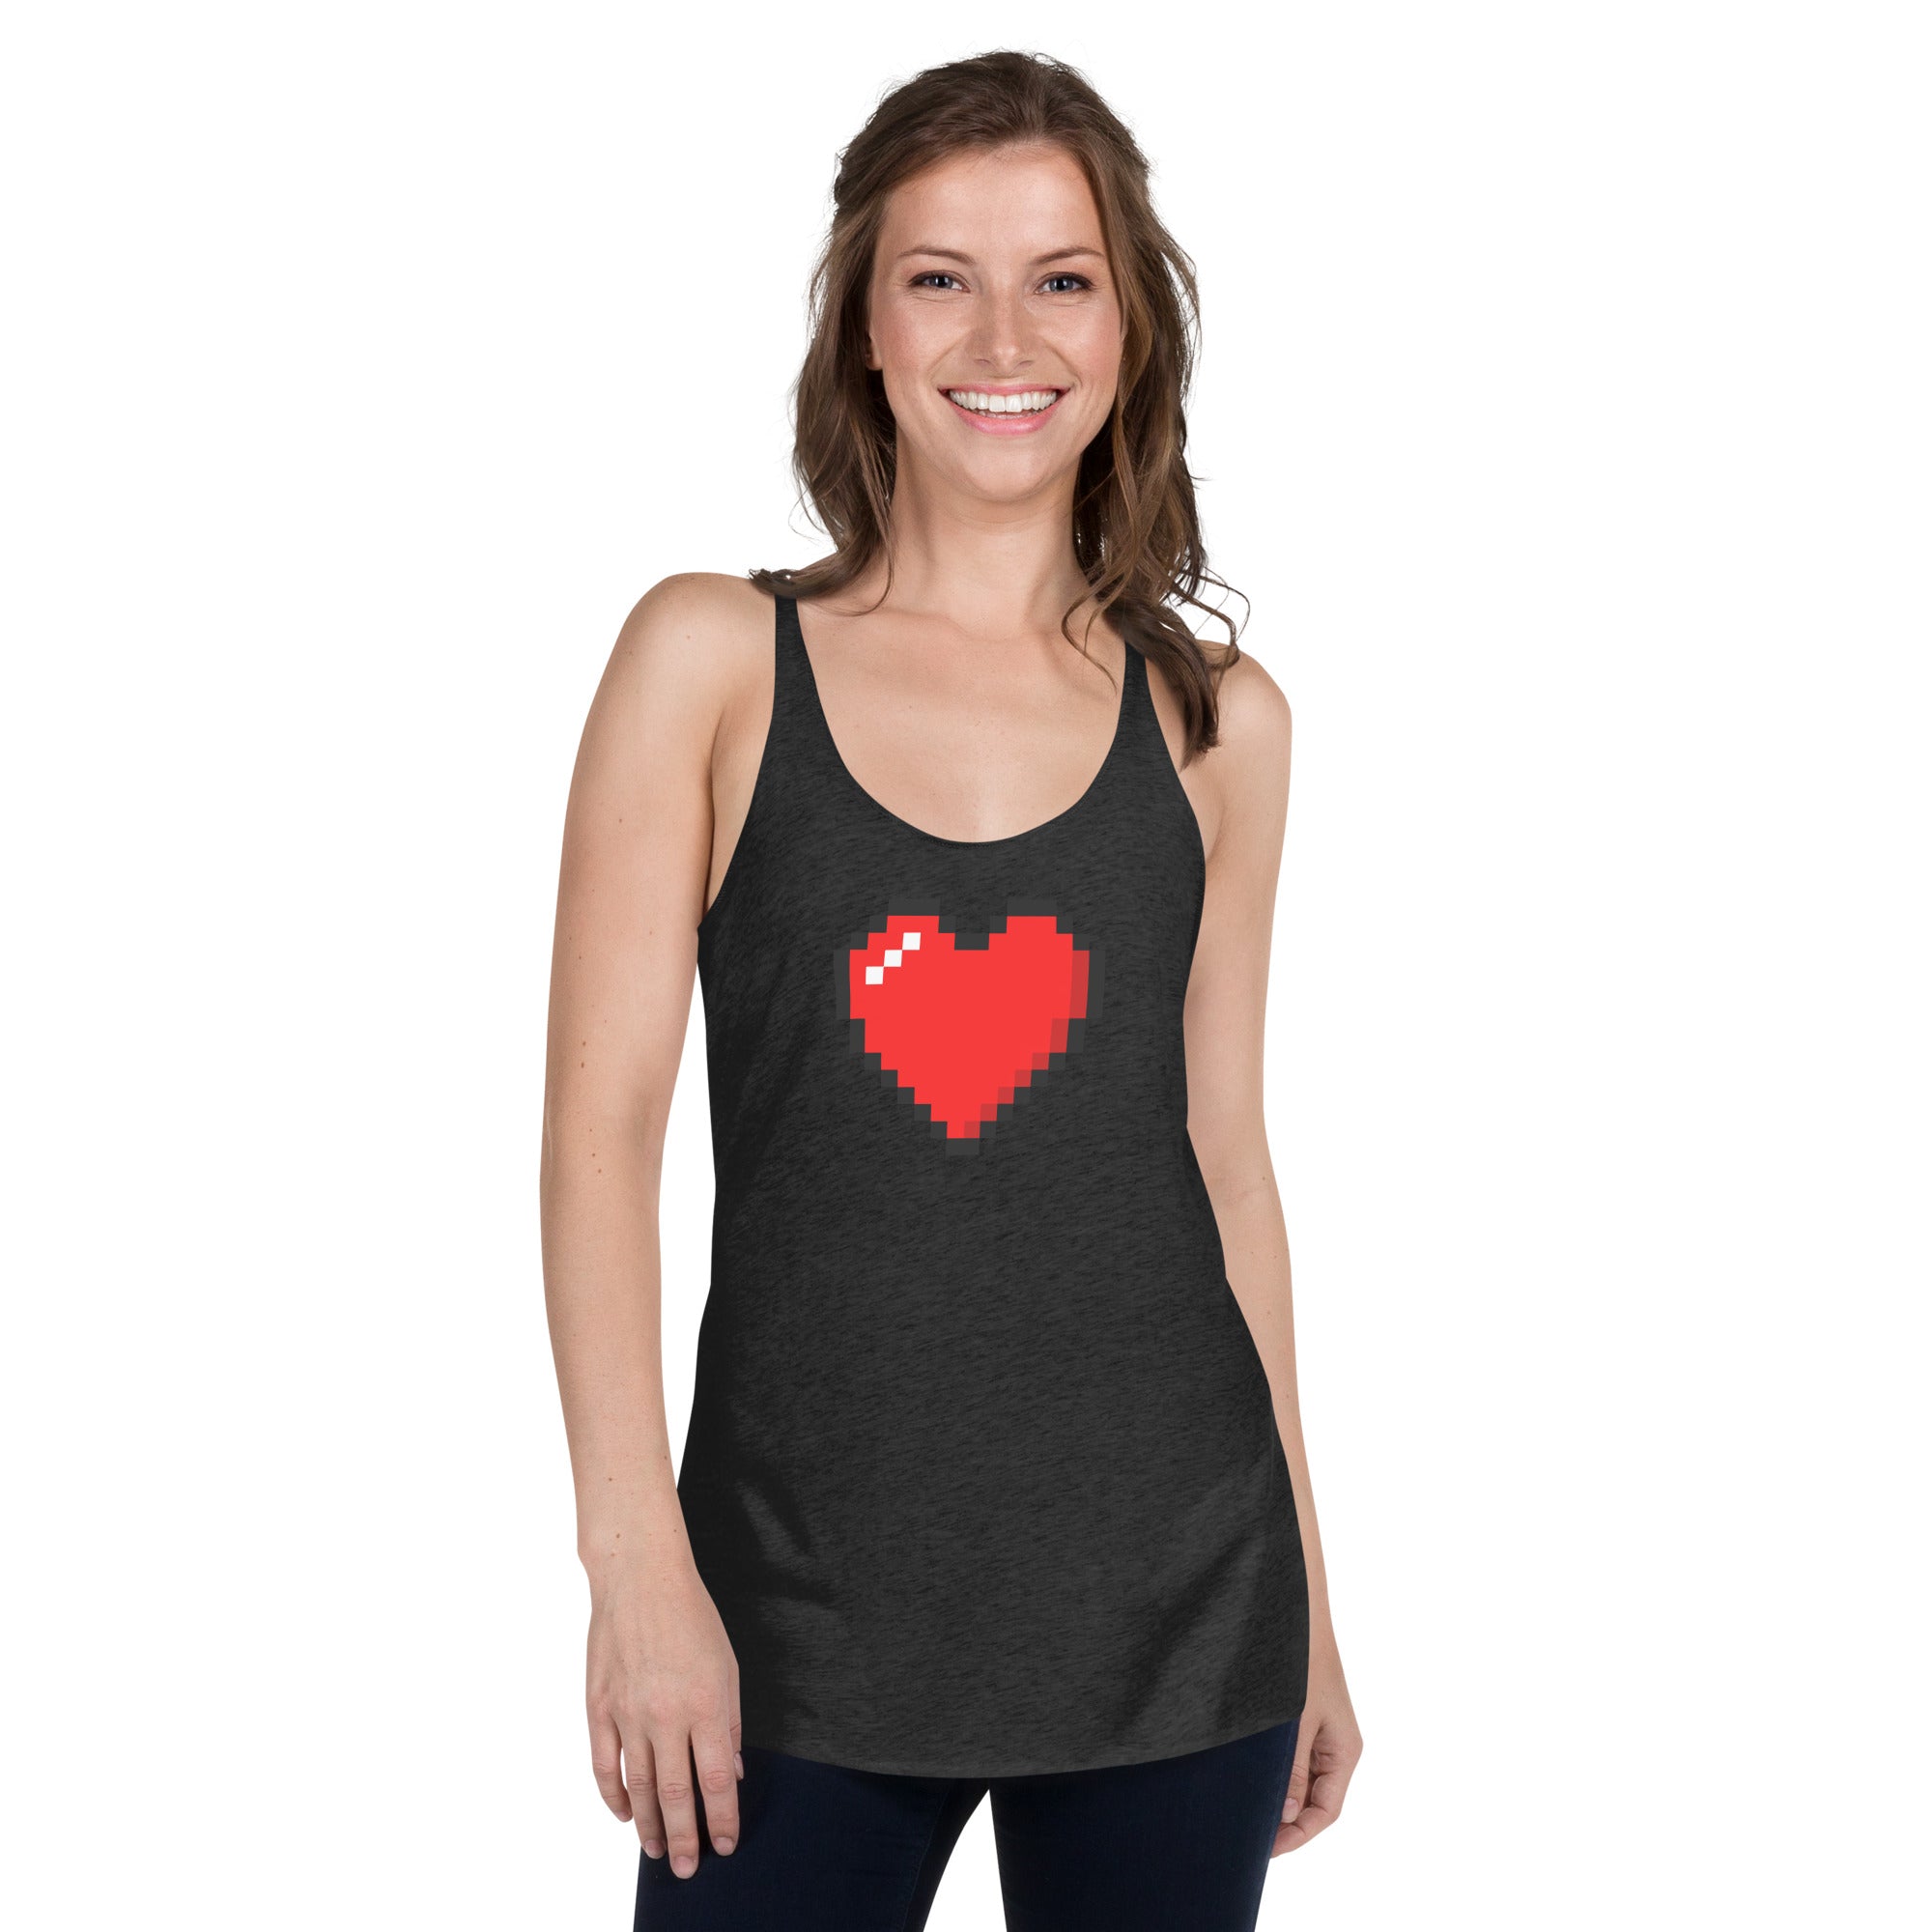 Retro 8 Bit Video Game Pixelated Heart Women's Racerback Tank Top Shirt